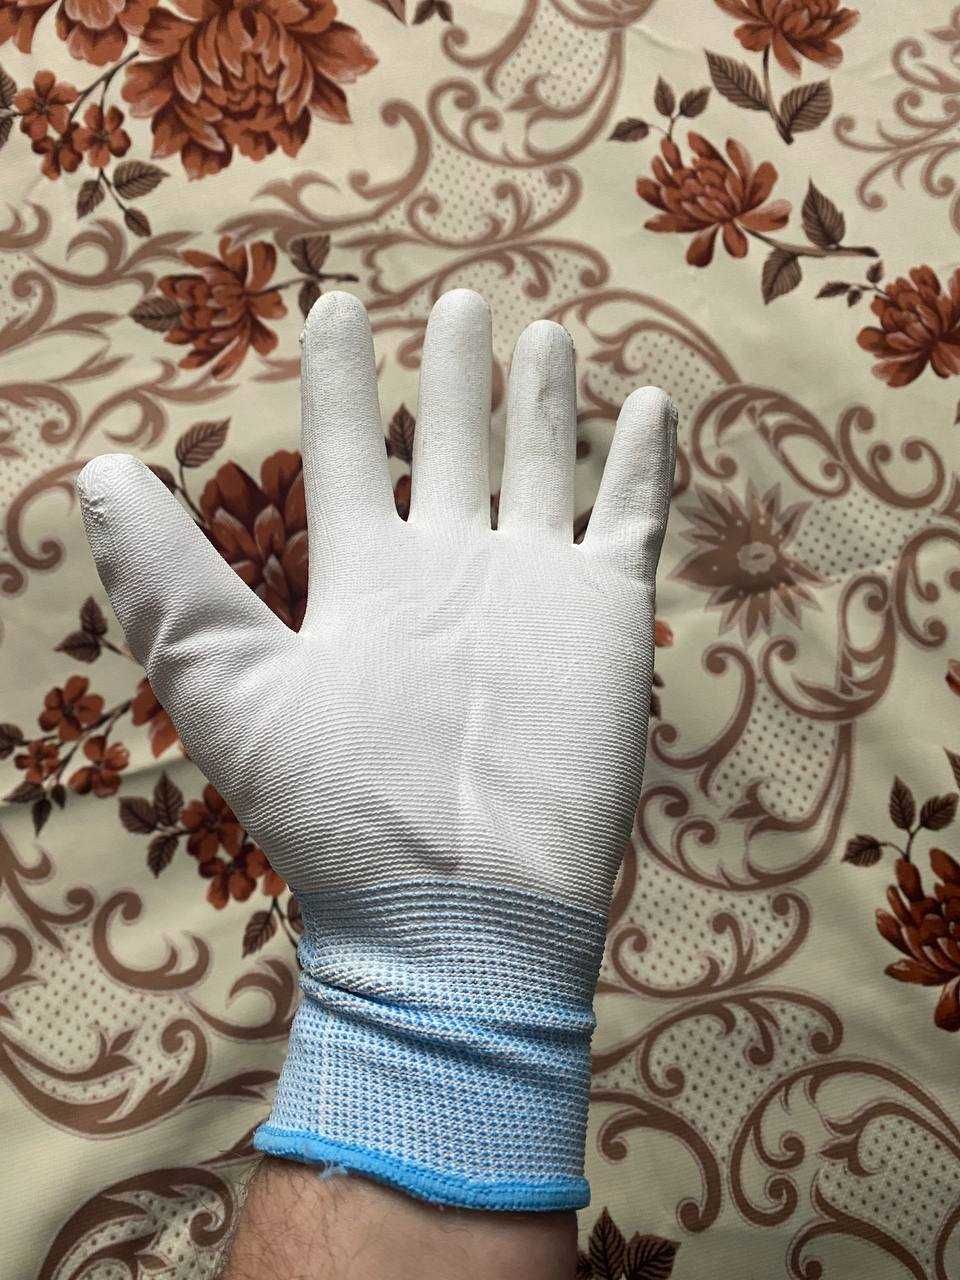 Робочі рукавиці , рабочие перчатки, спецодяг, спецодежда